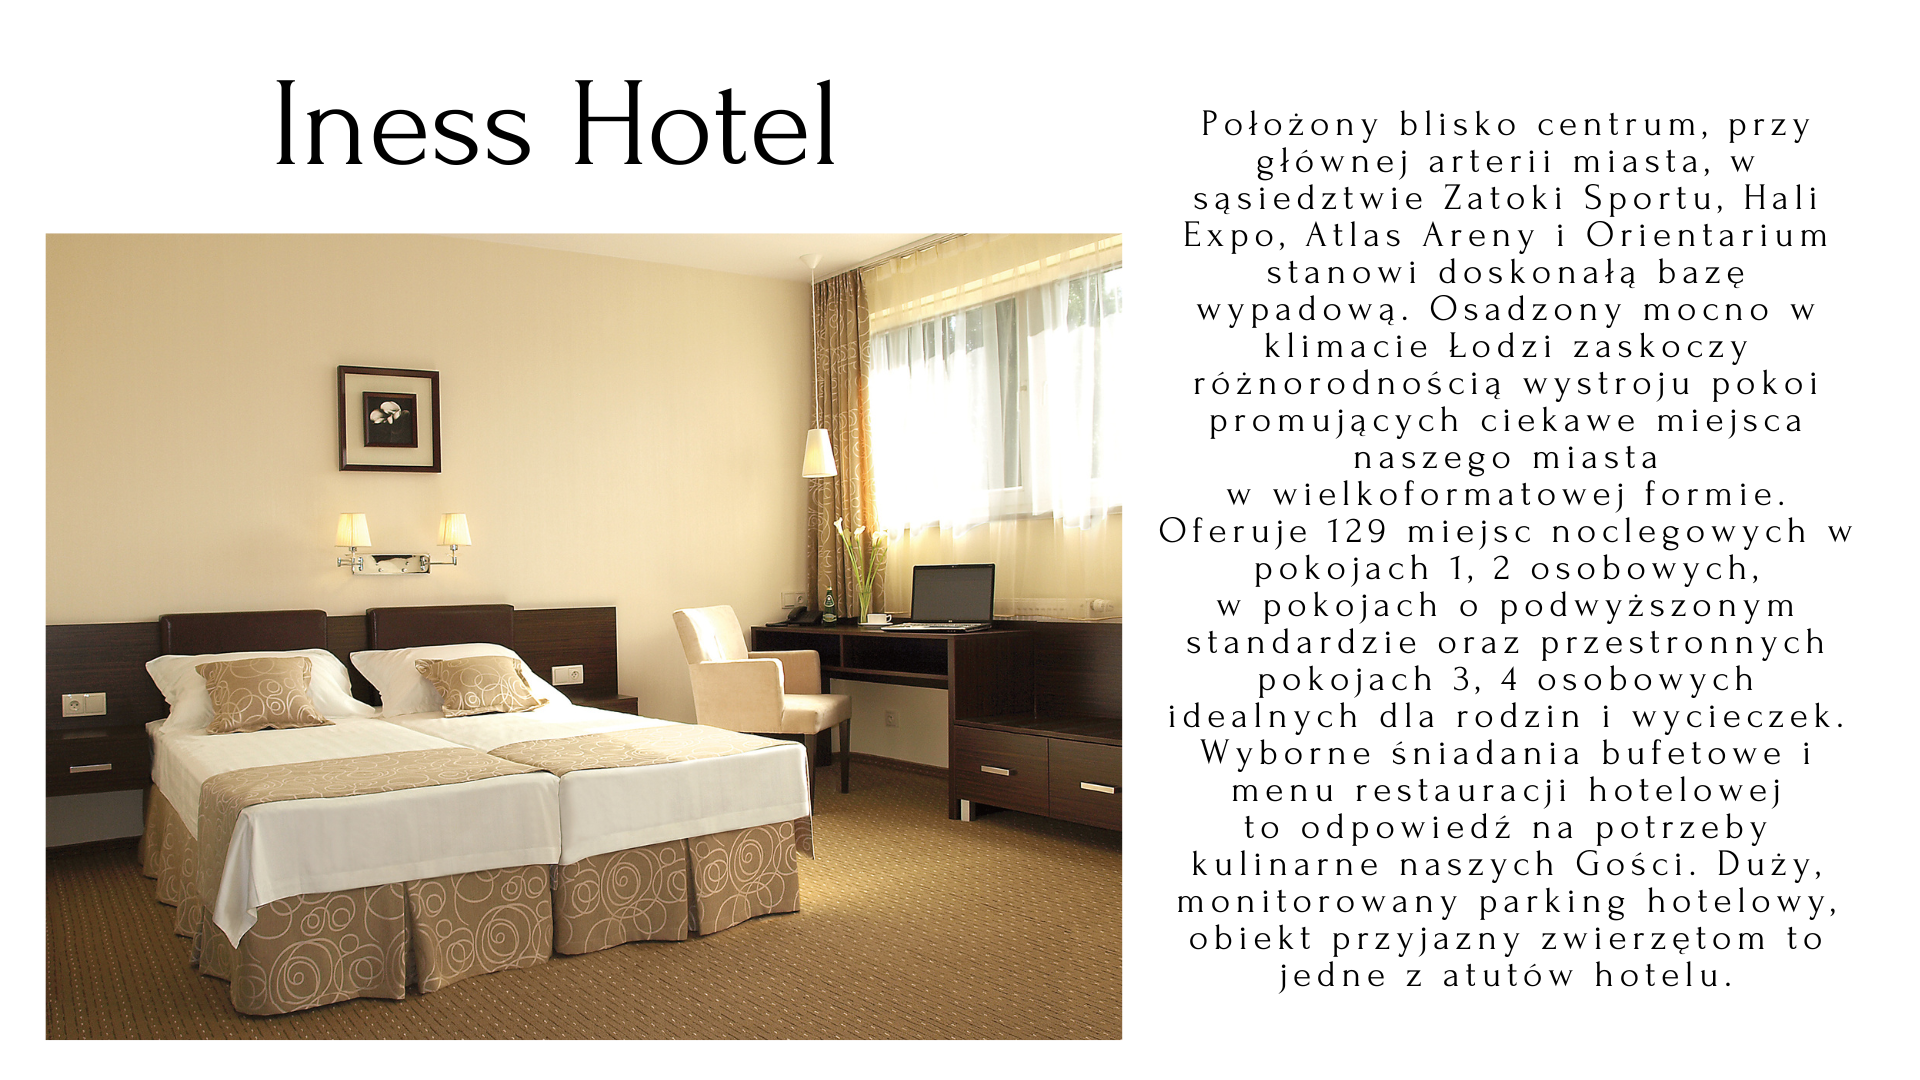 Iness Hotel